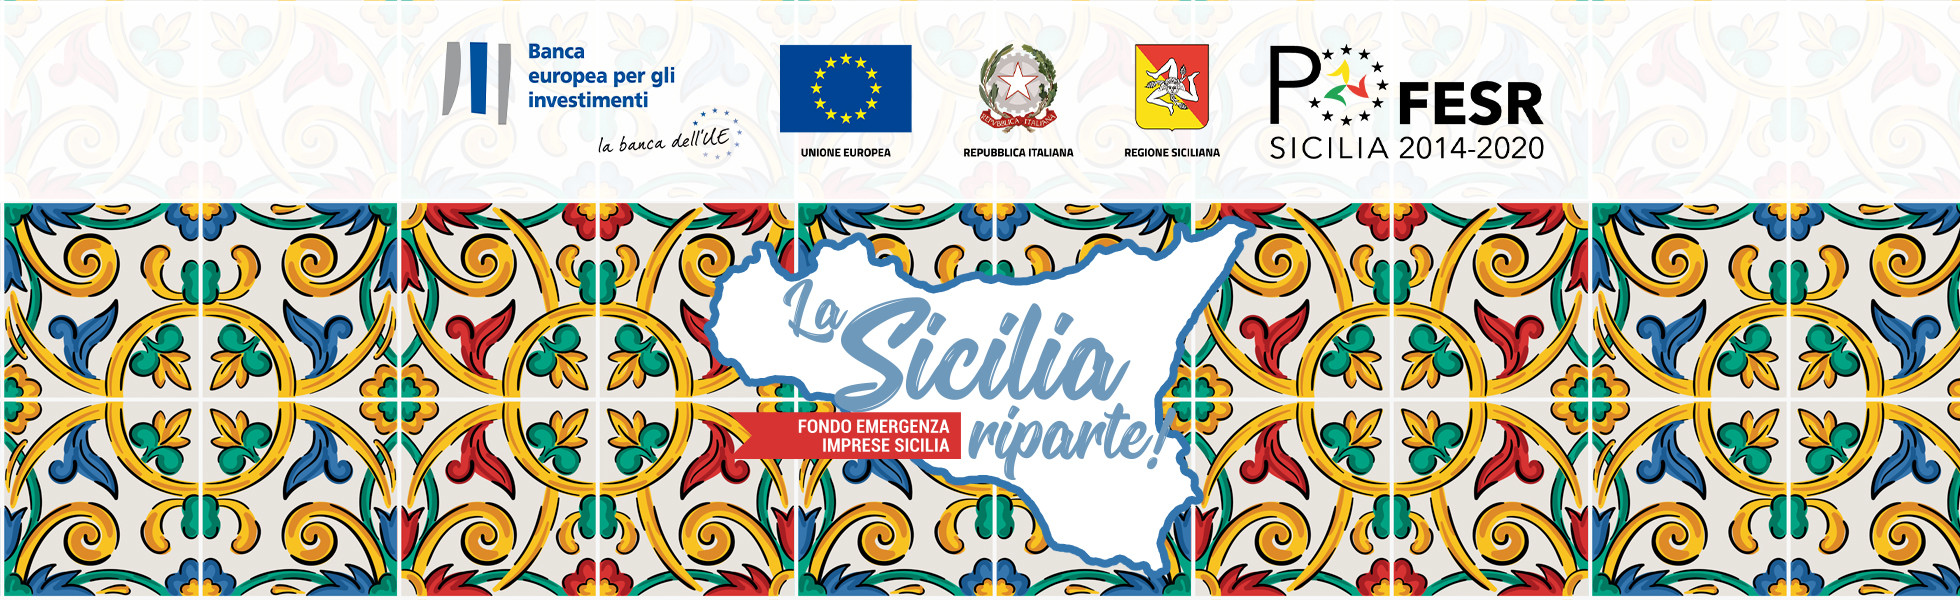 Banner Fondo emergenza imprese Sicilia